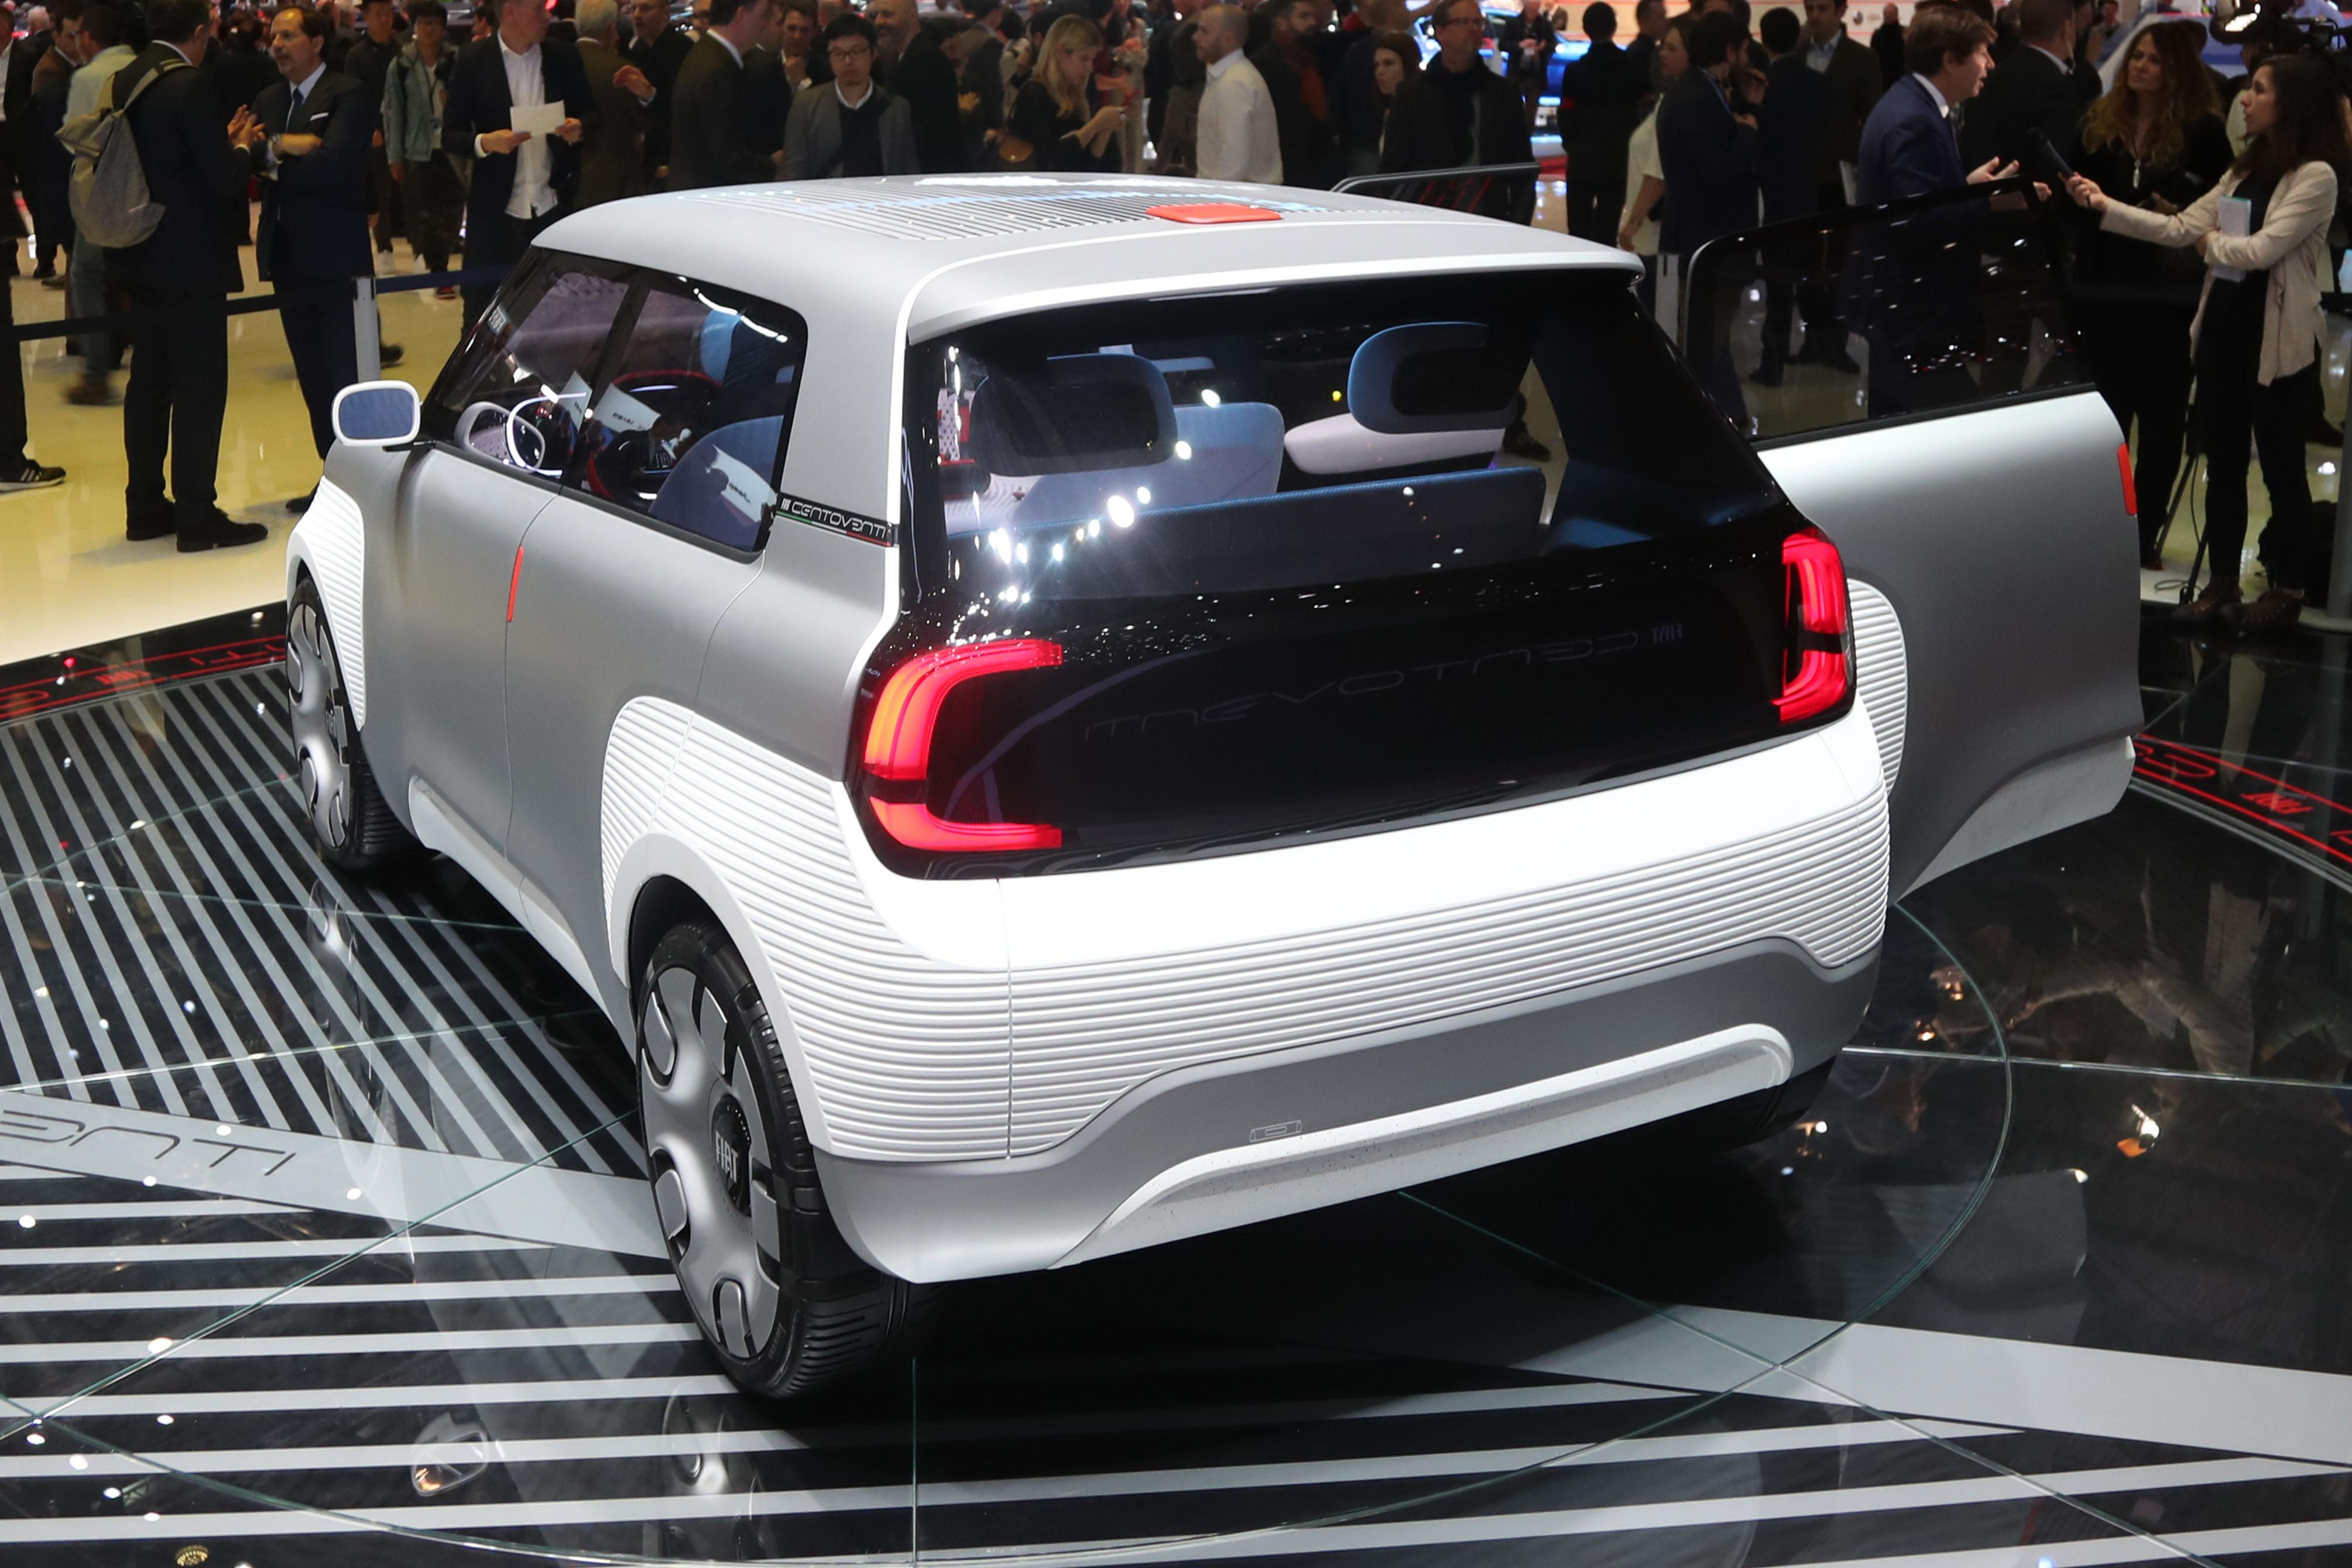 Fiat details European plans for new SUVs, EVs, and Panda successor